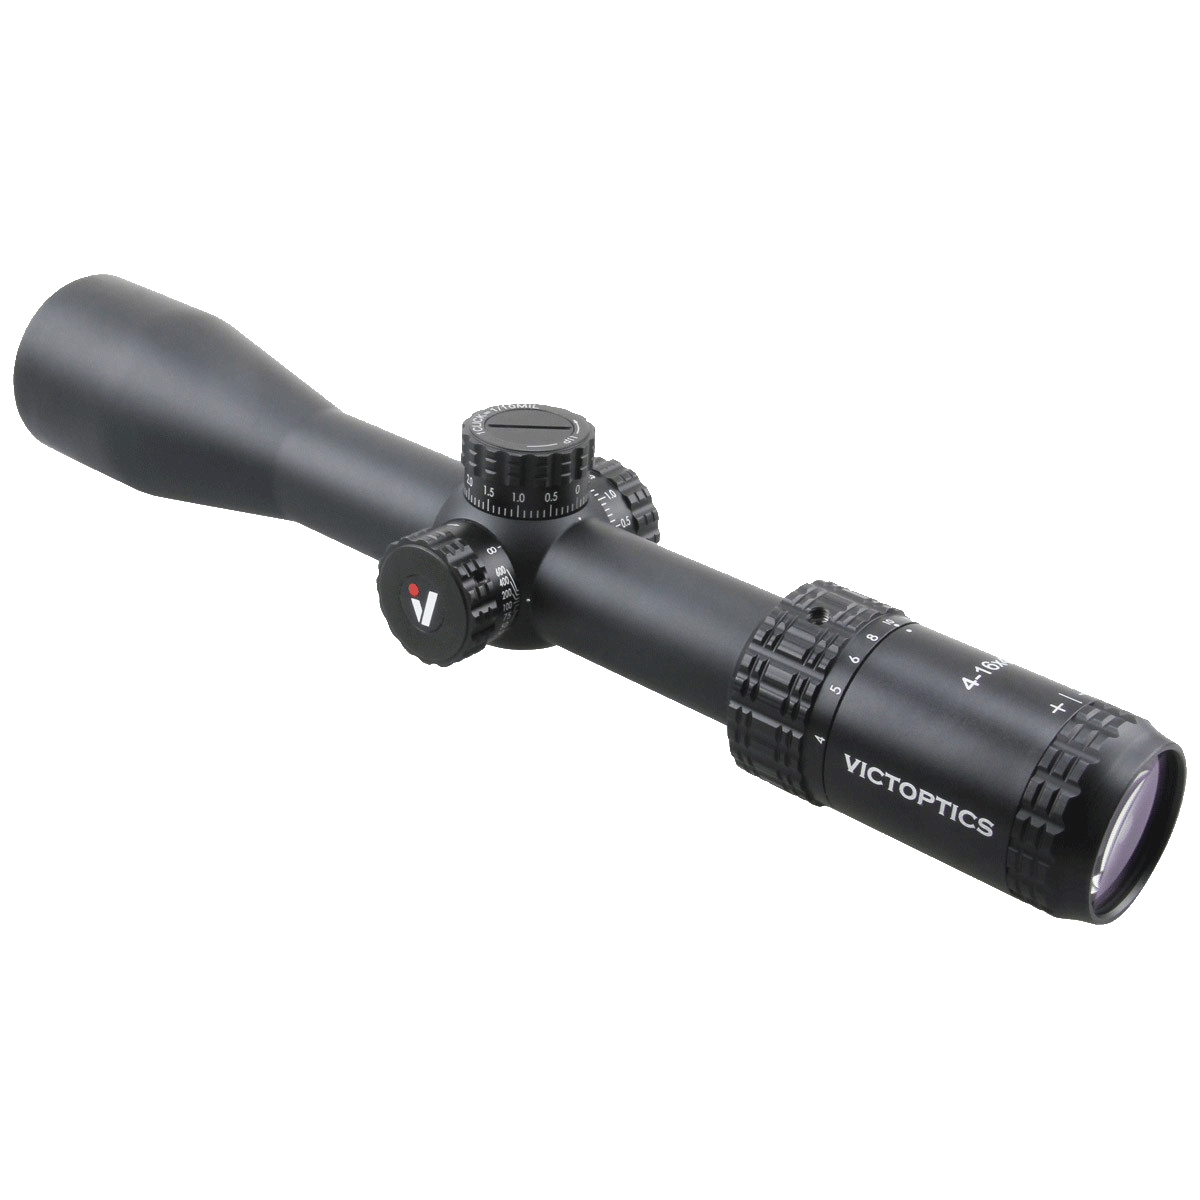 VictOptics S4 4-16x44 SFP MDL Riflescope